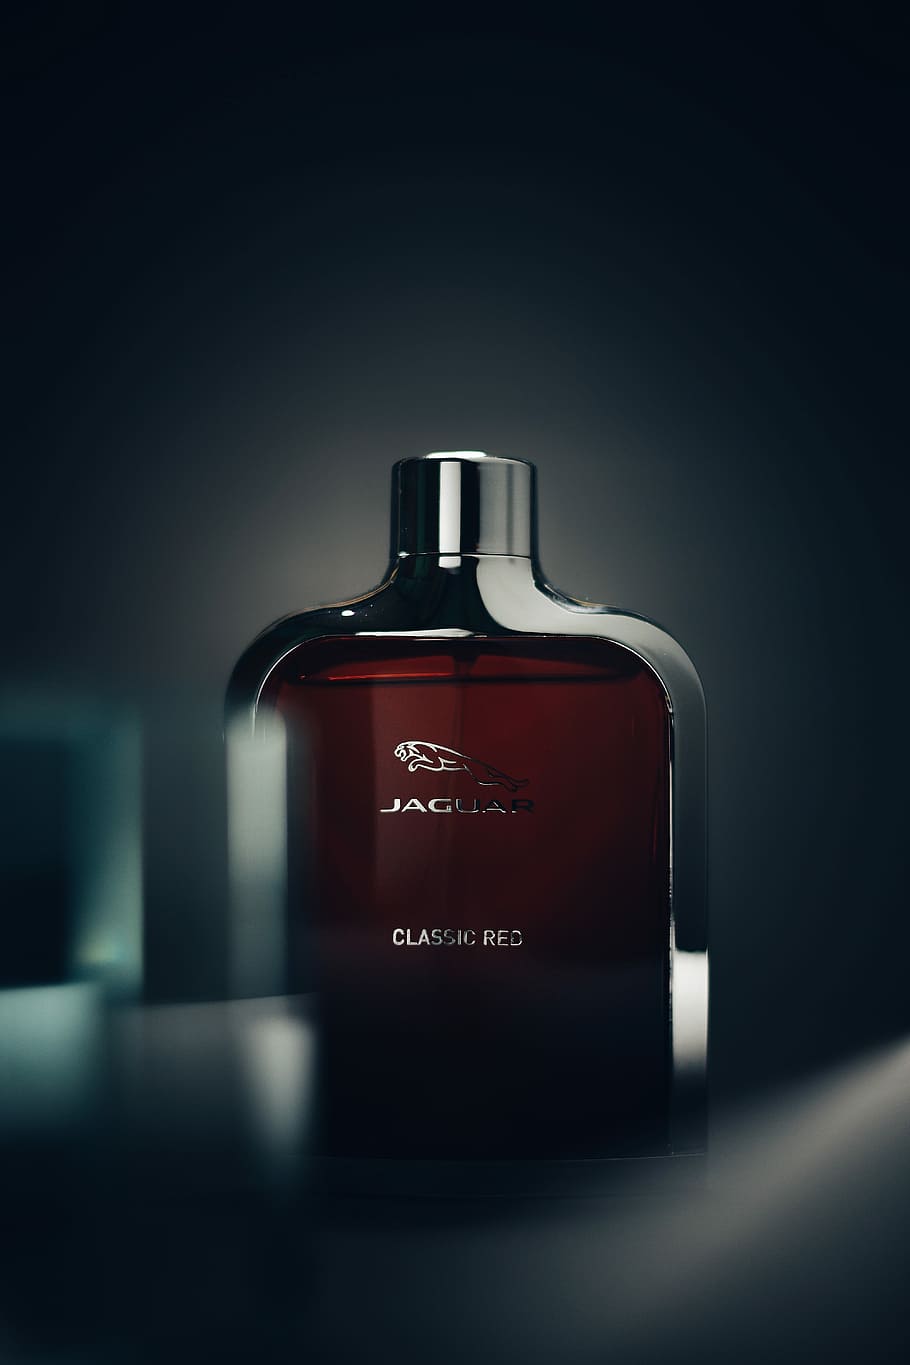 Jaguar Classic Red fragrance bottle, aftershave, scent, perfume